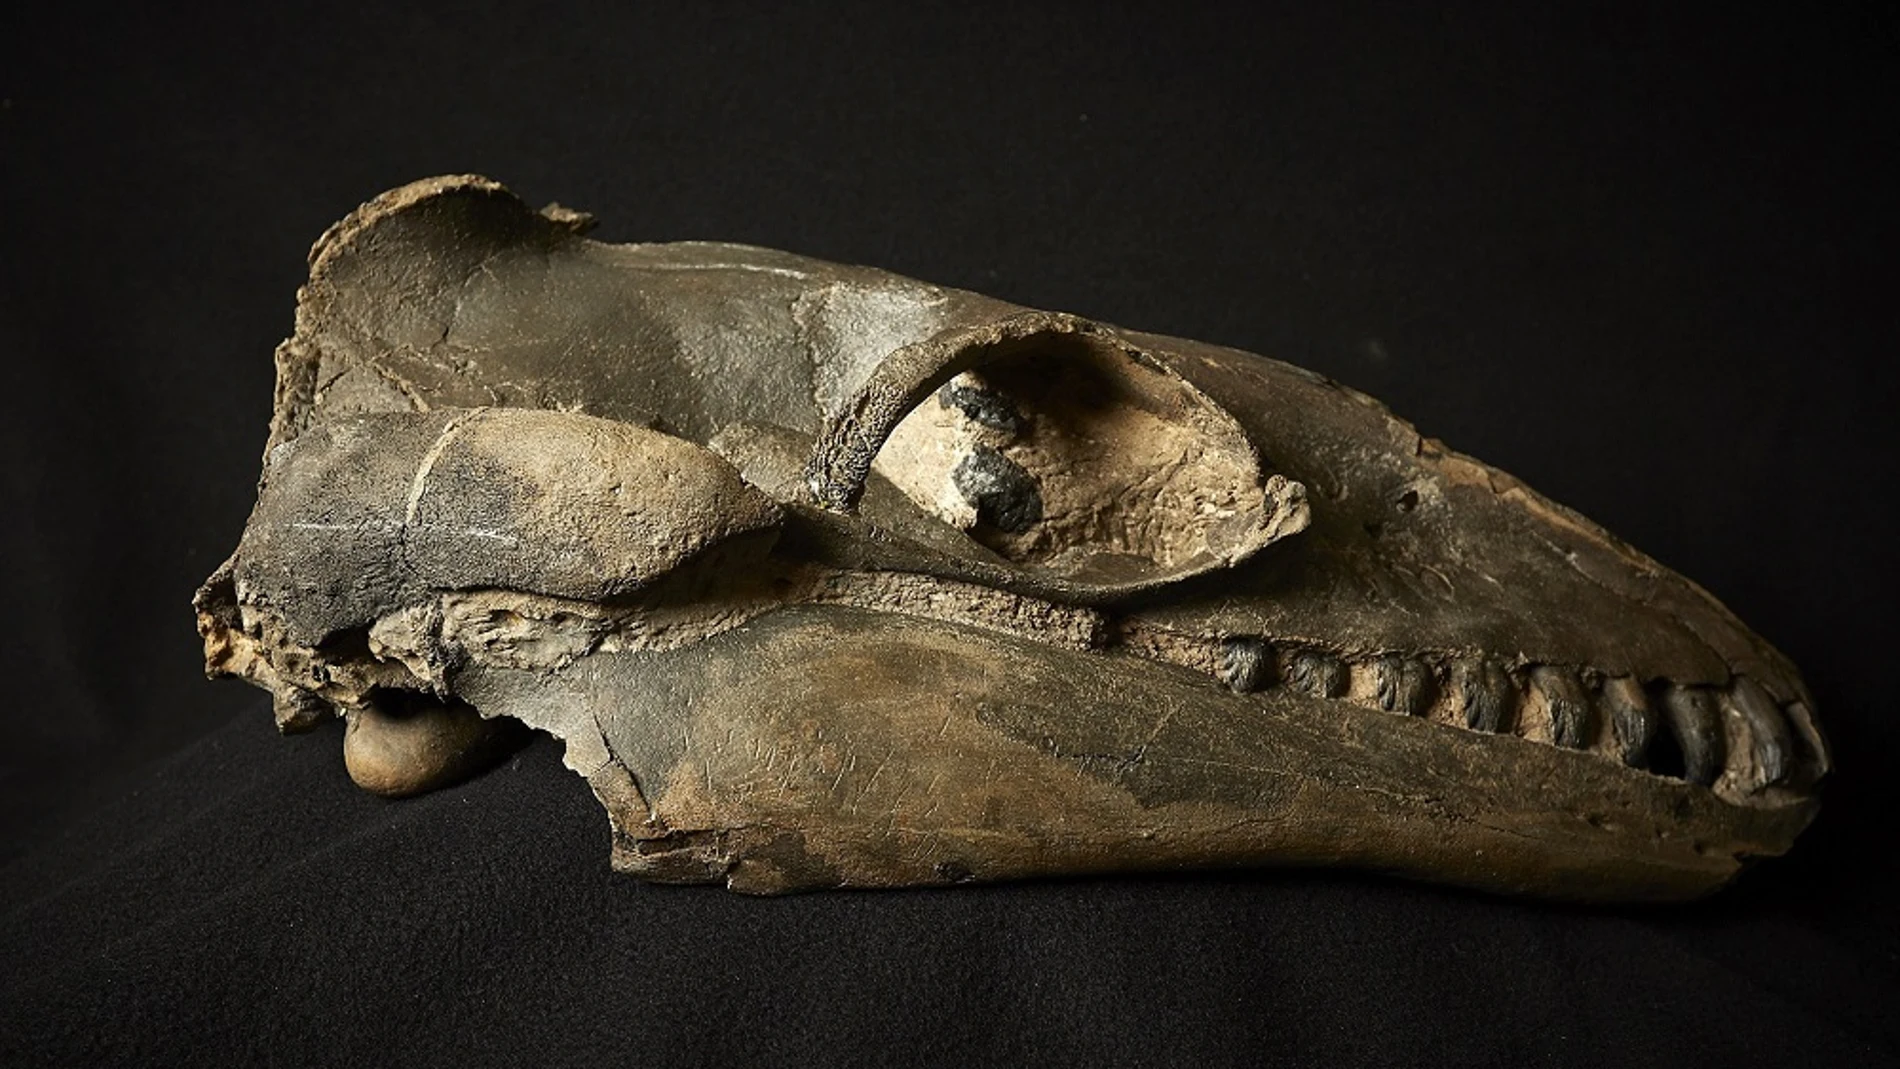  calavera fosilizada de una ballena primitiva llamada "Janjucetus"